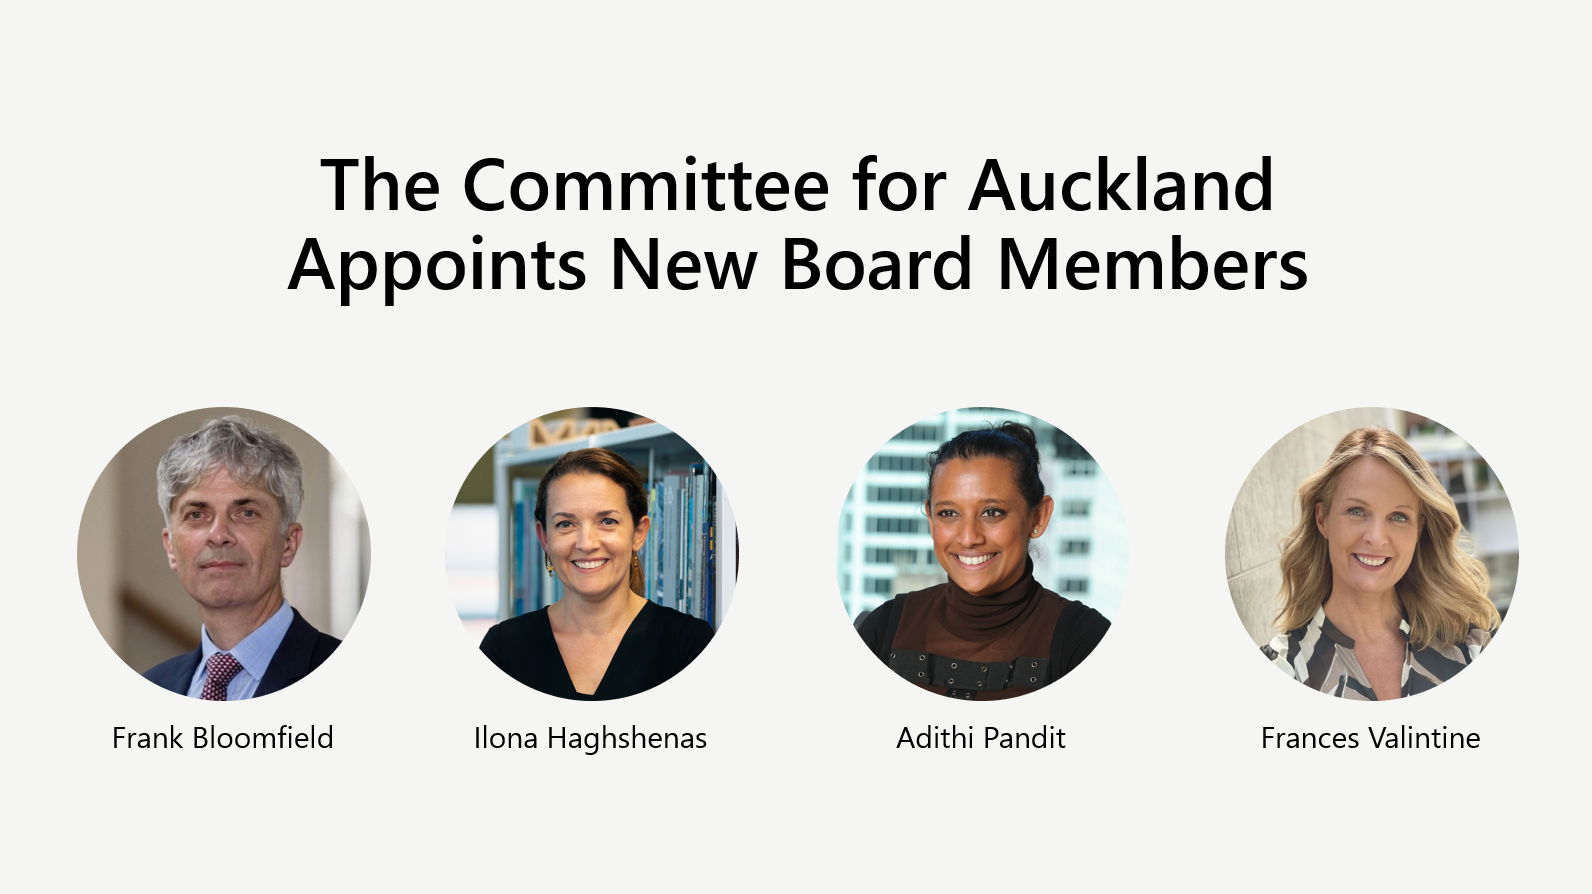 New Board members